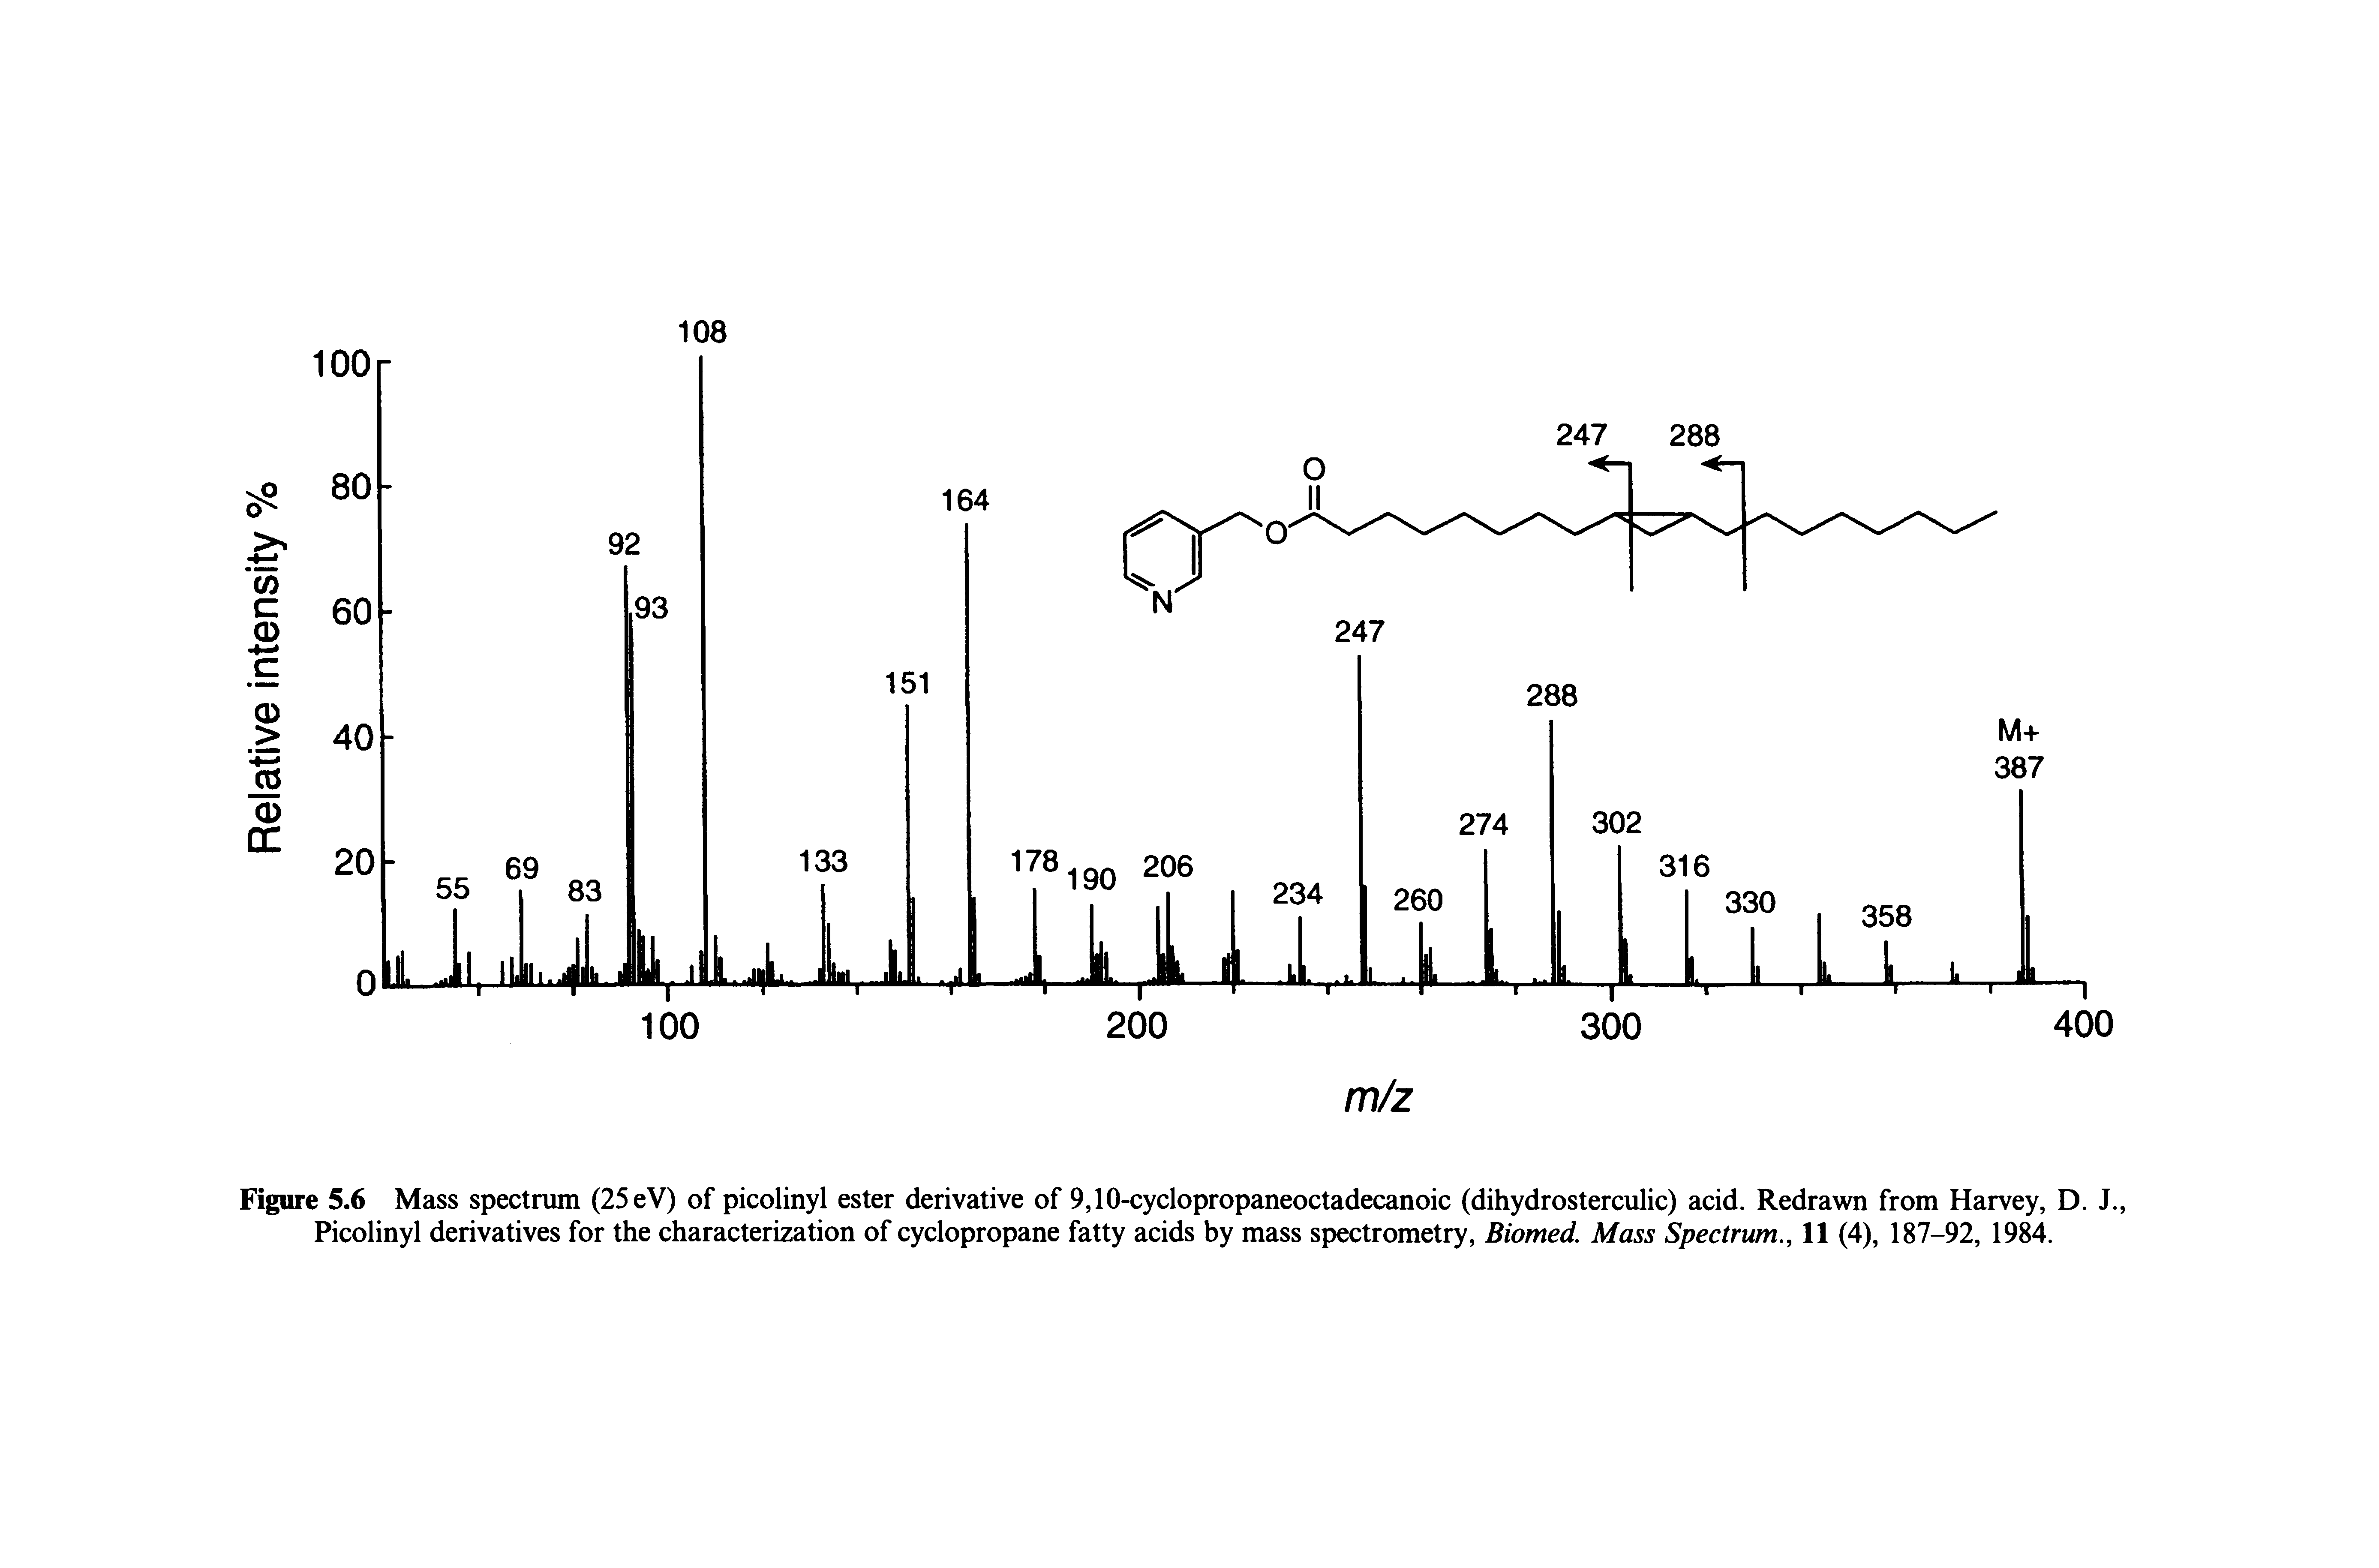 Figure 5.6 Mass spectrum (25 eV) of picolinyl ester derivative of 9,10-cyclopropaneoctadecanoic (dihydrosterculic) acid. Redrawn from Harvey, D. J., Picolinyl derivatives for the characterization of cyclopropane fatty acids by mass spectrometry, Biomed. Mass Spectrum., 11 (4), 187-92, 1984.